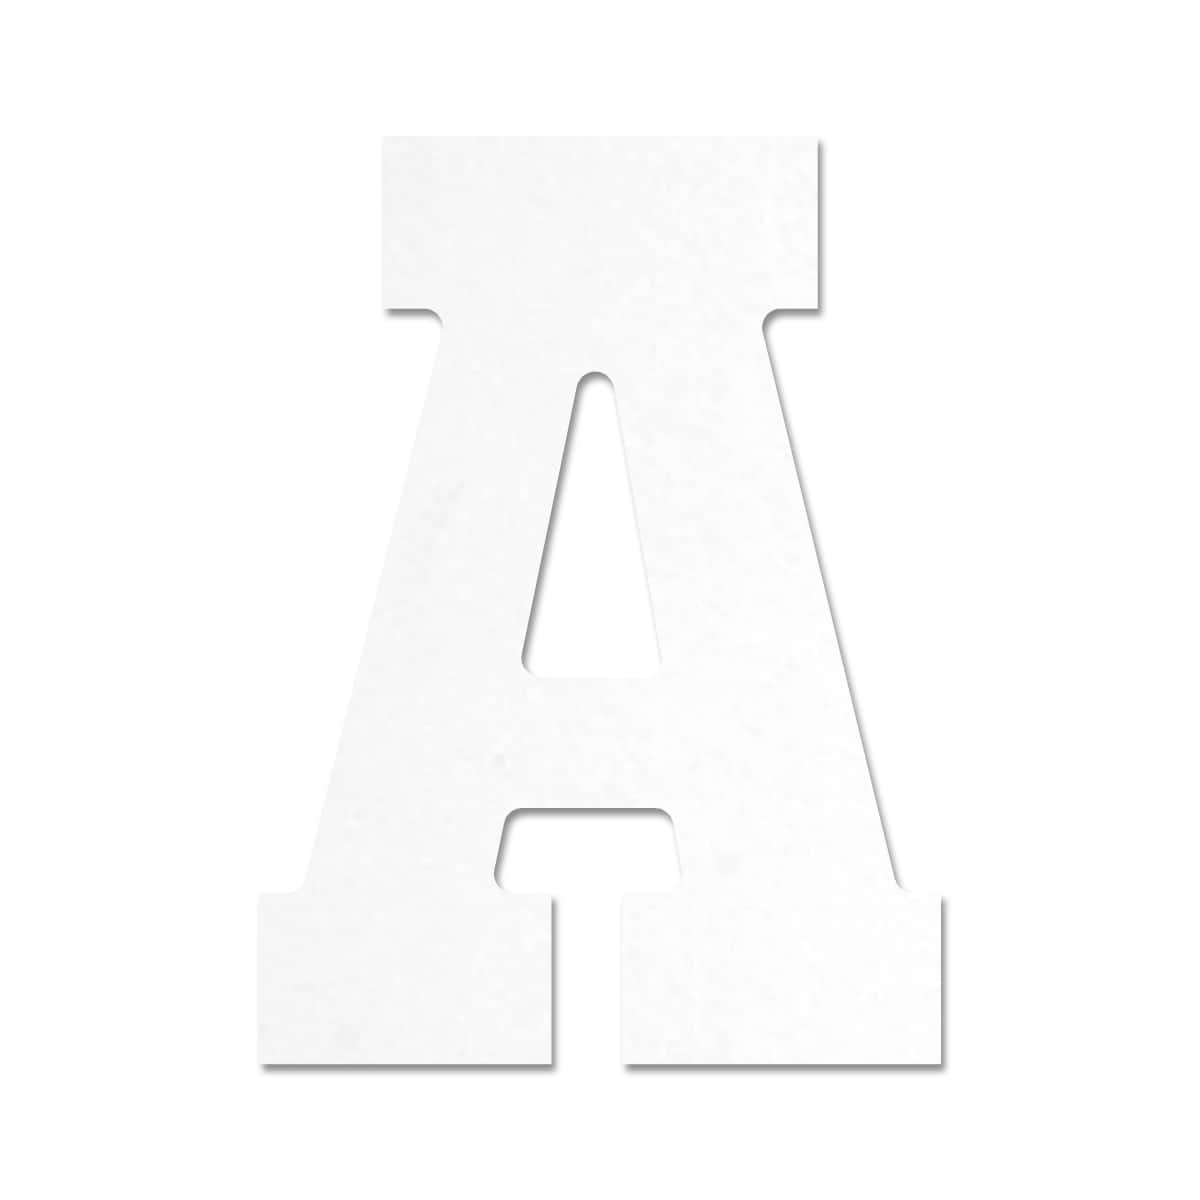 Wood Alphabet Tiles by Make Market®